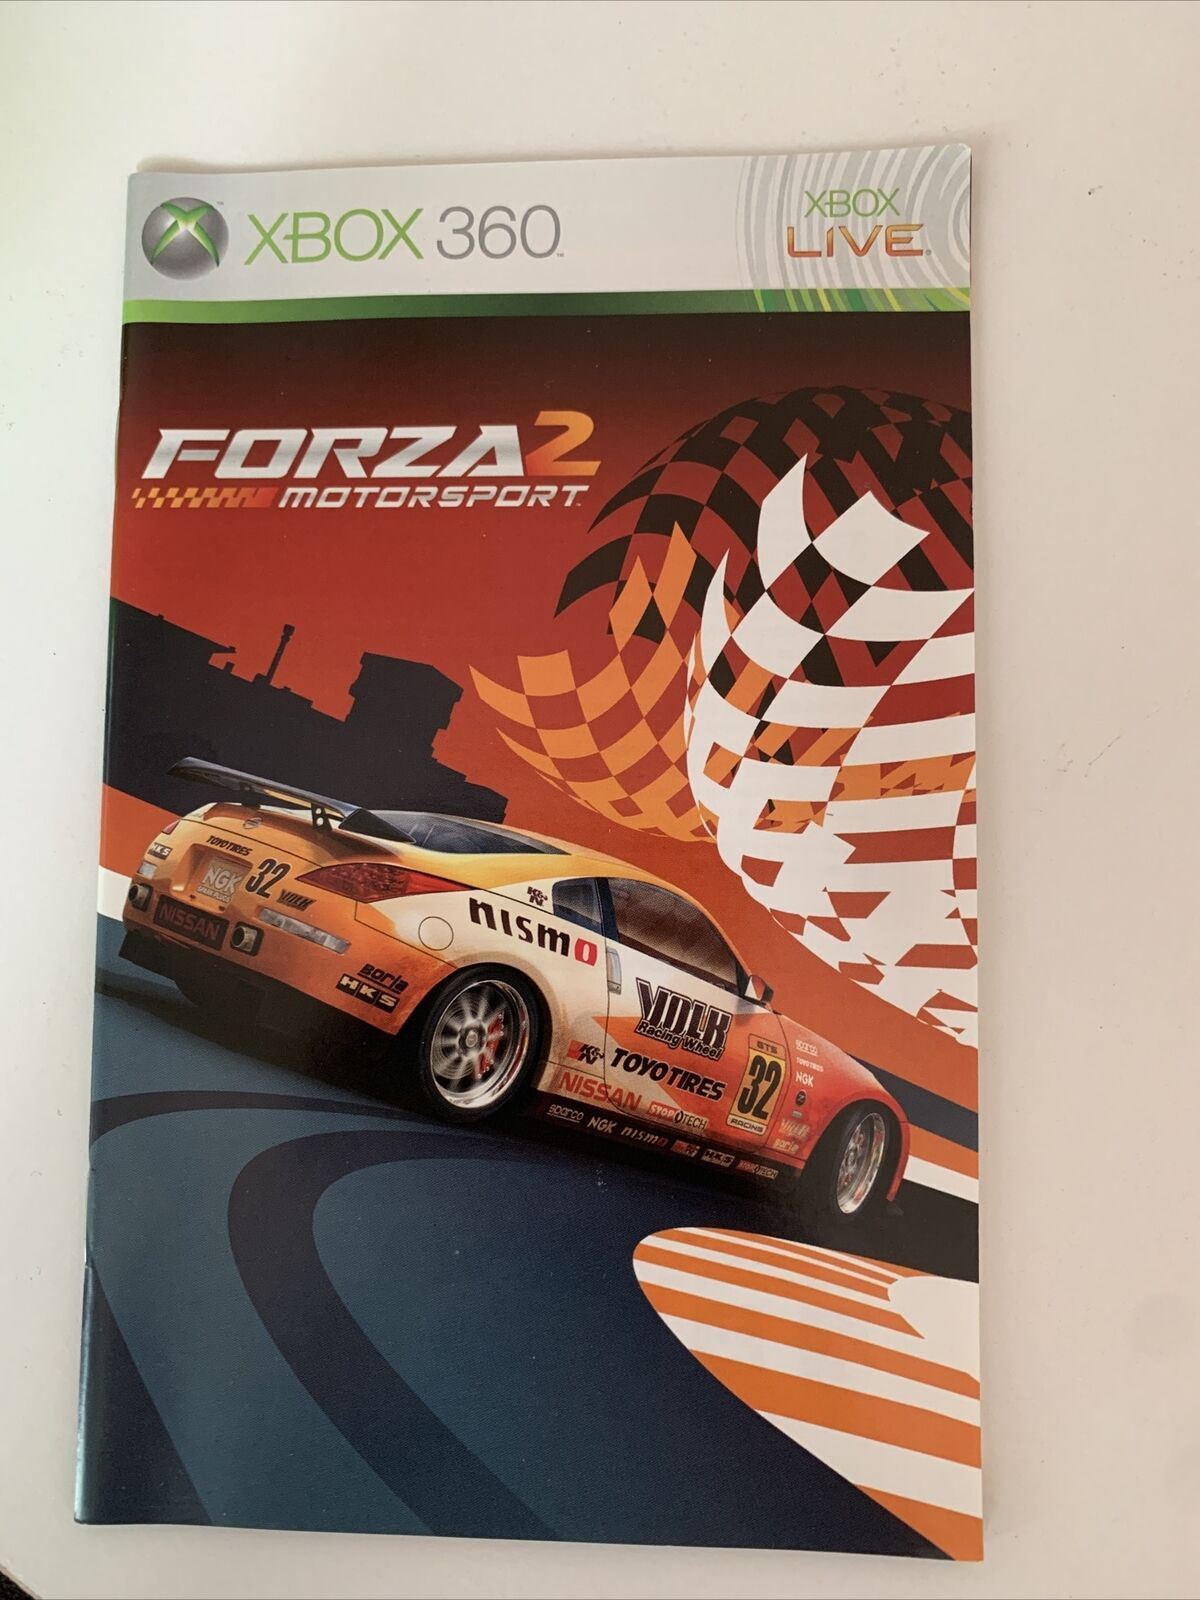 Viva Pinata / Forza 2 Motorsport - Microsoft XBOX 360 PAL 2-Disc Game Bundle